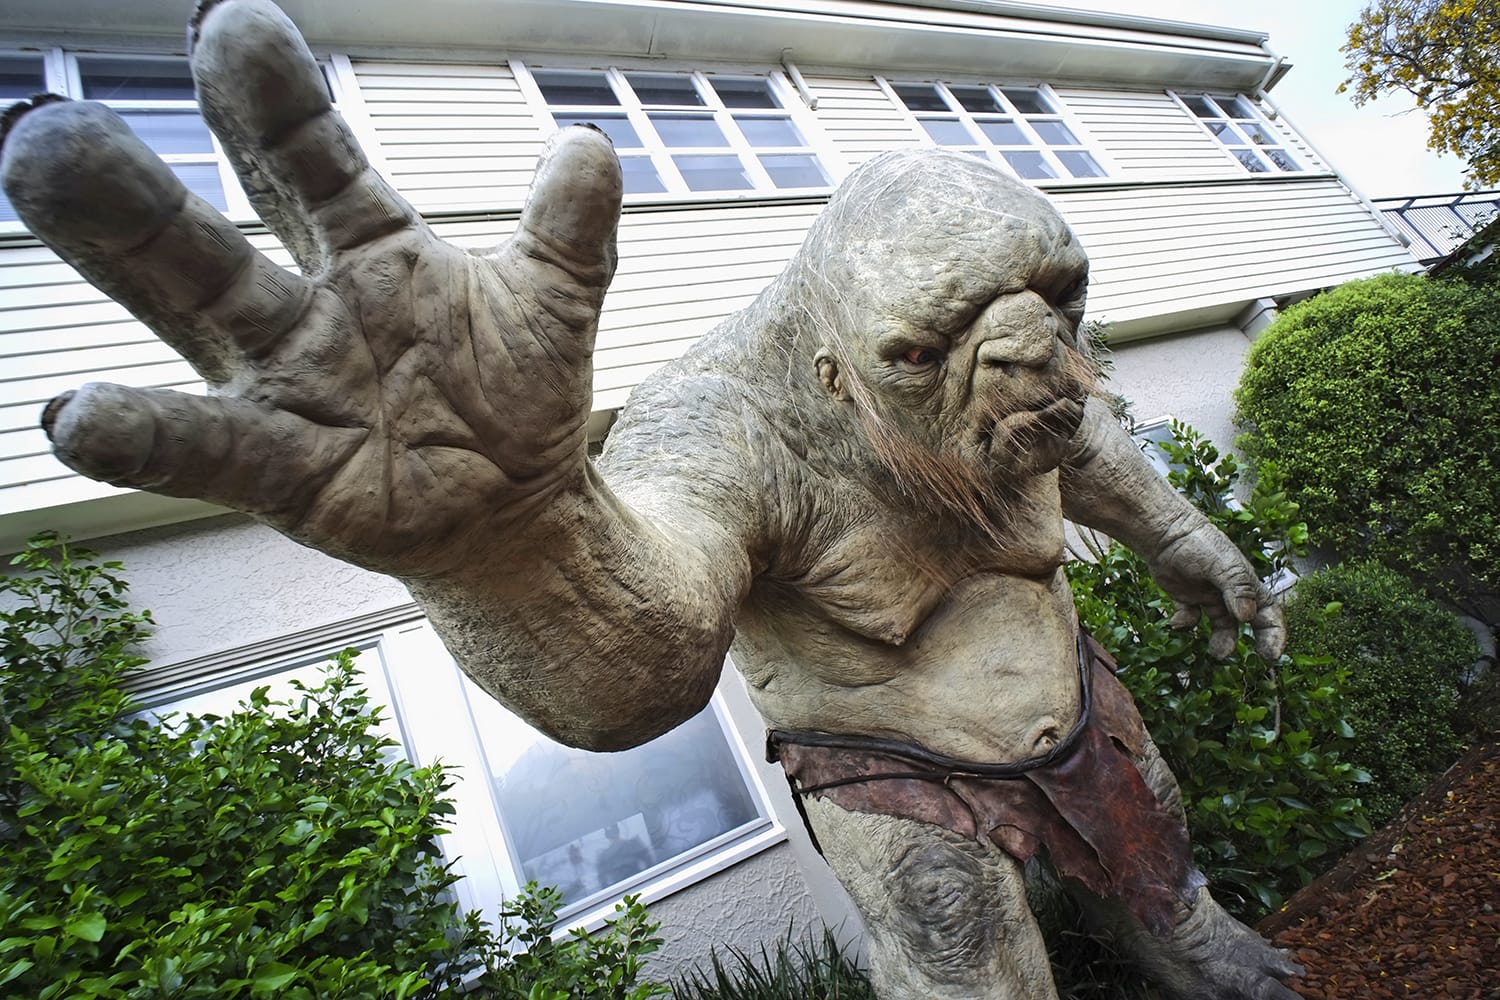 Troll on display at Weta Cave film studios in Wellington, New Zealand